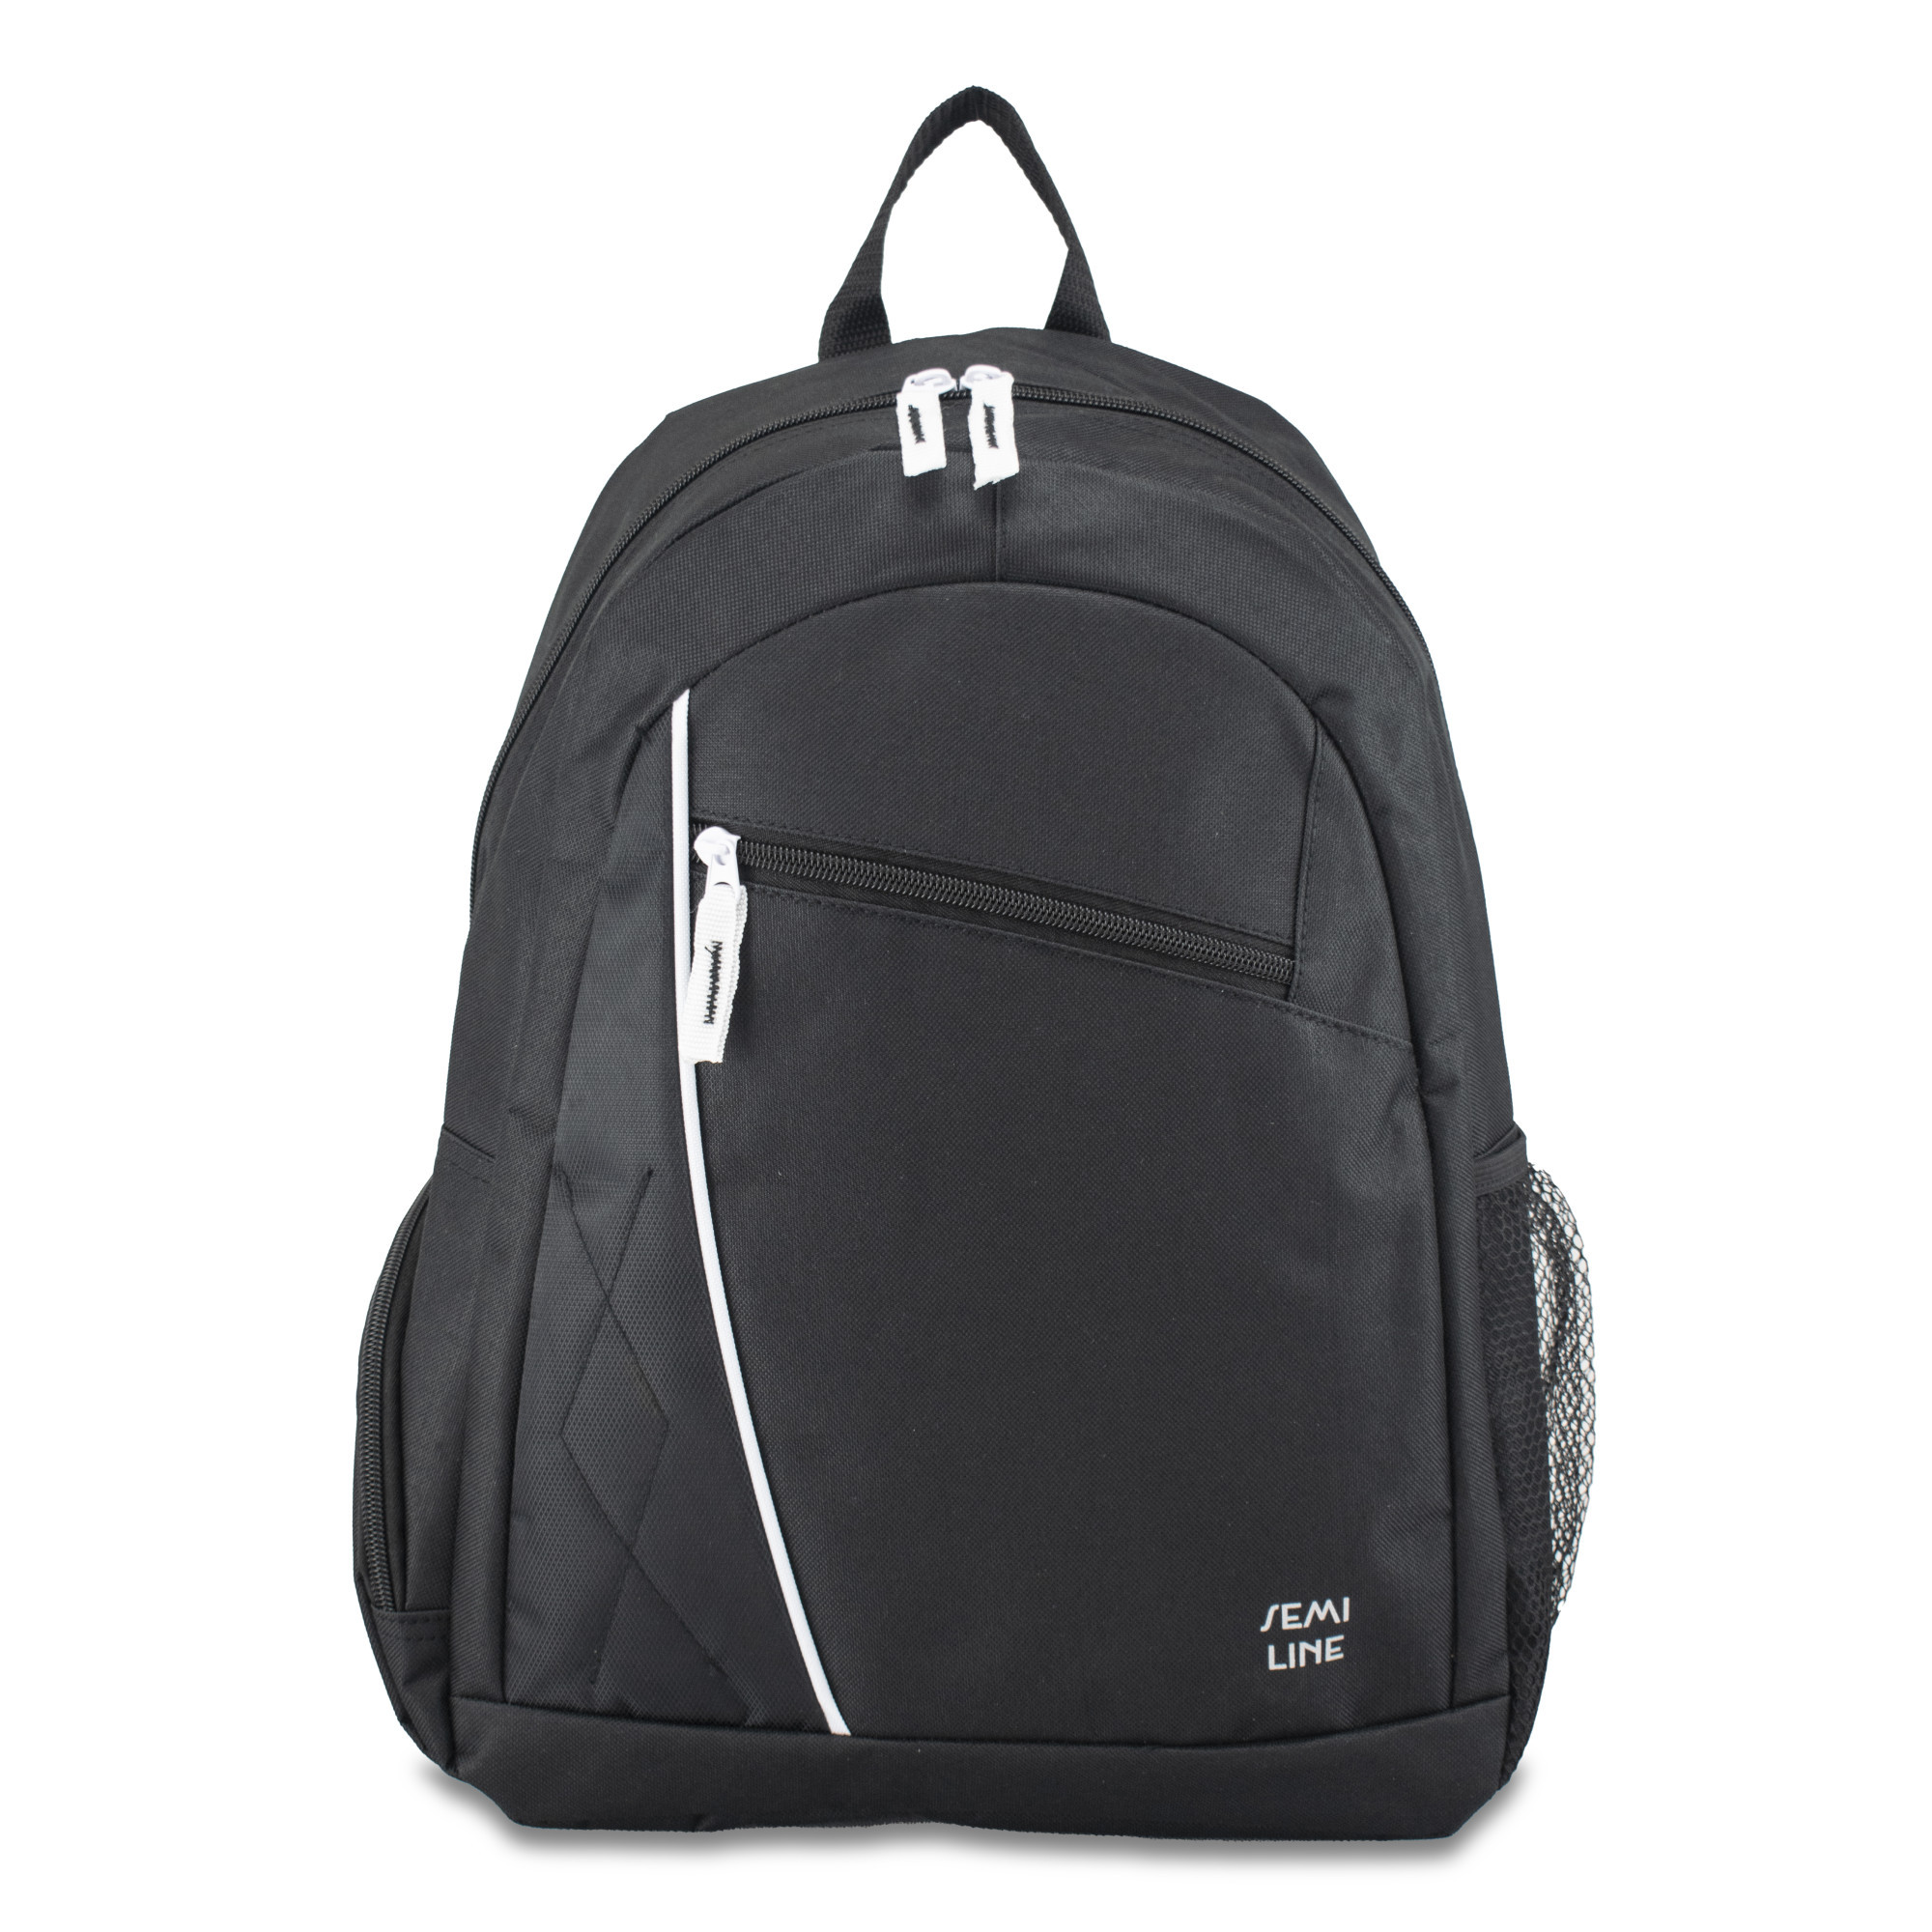 Školní batoh Semiline A3038-1 Black 43 cm x 30 cm x 15 cm